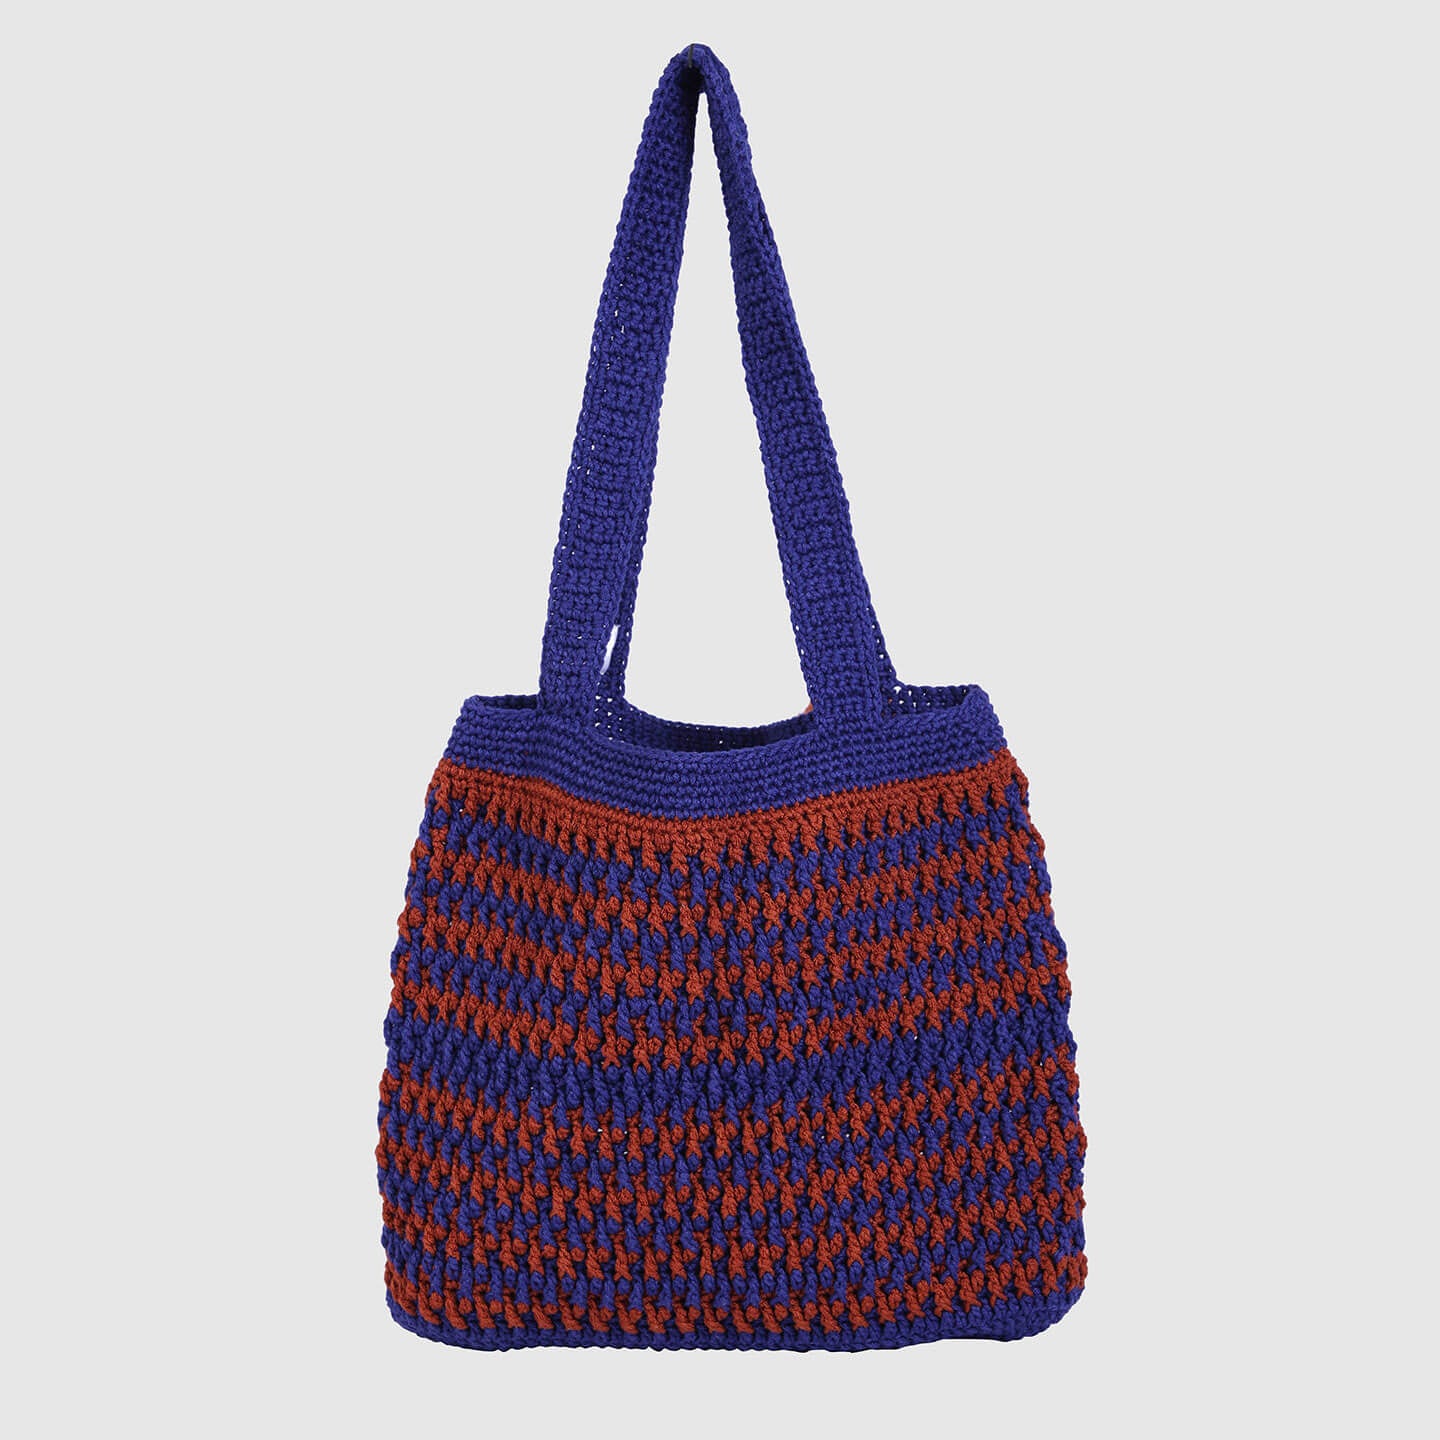 Handmade Crochet Bag - Blue & Brown 3114